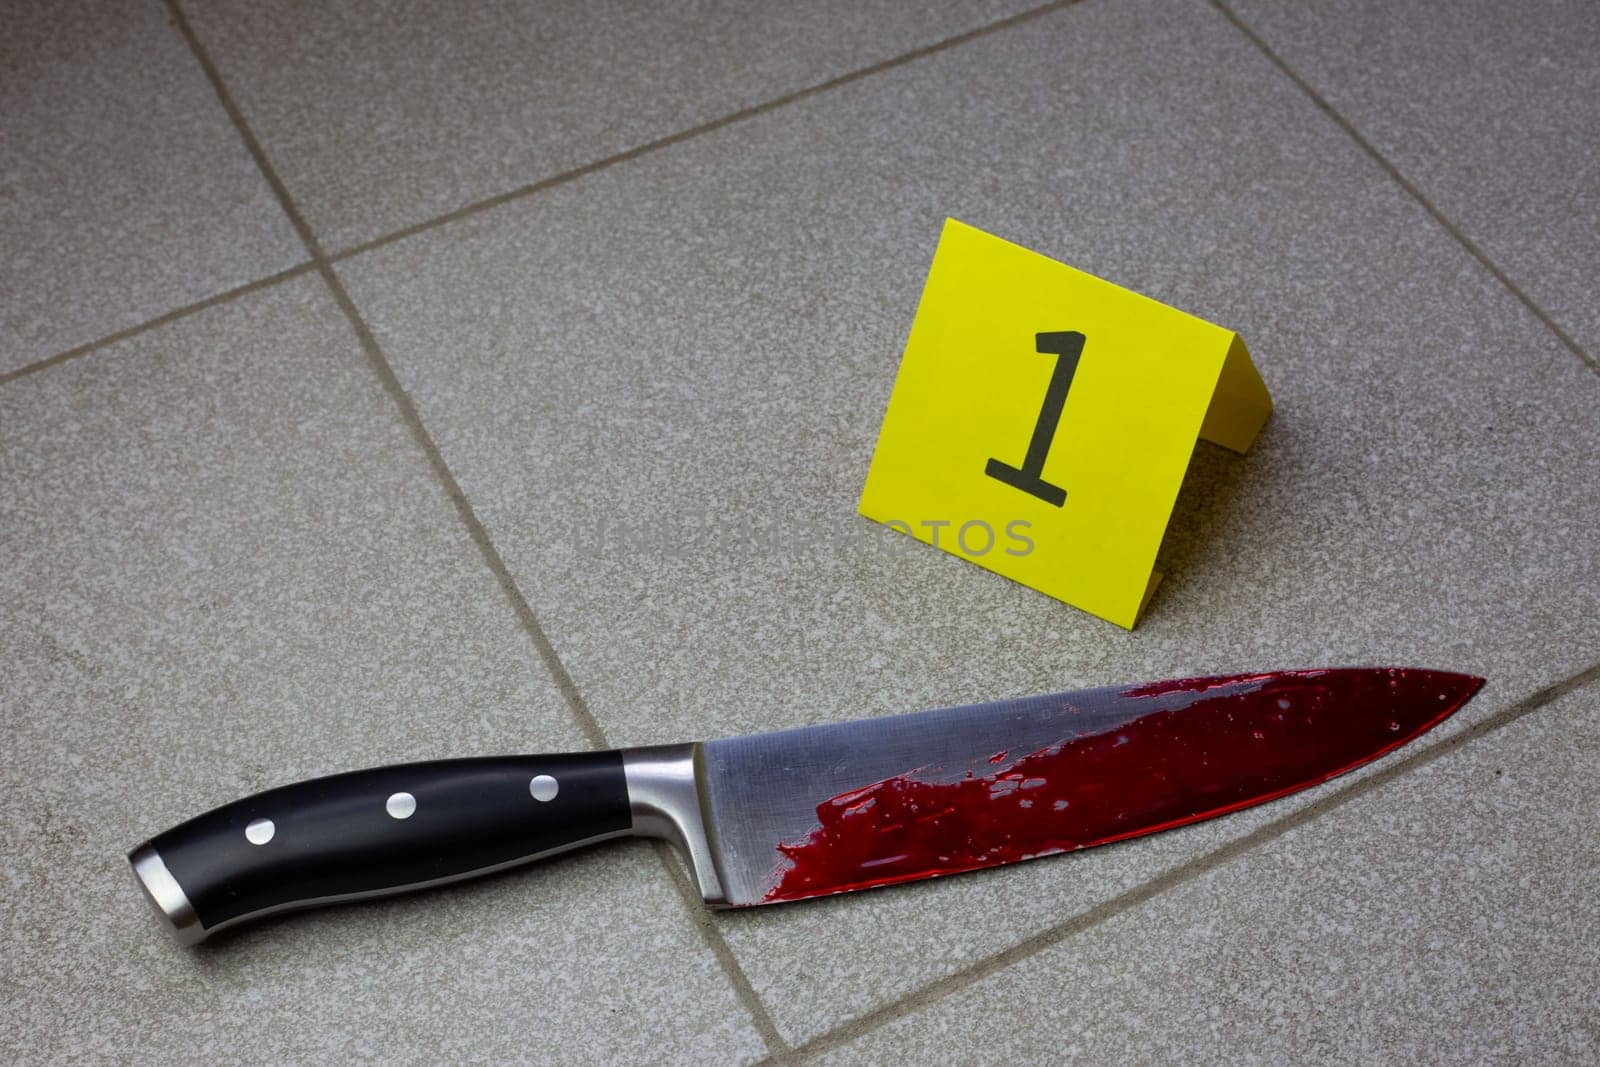 Bloody knife at crime scene by timurmalazoniia